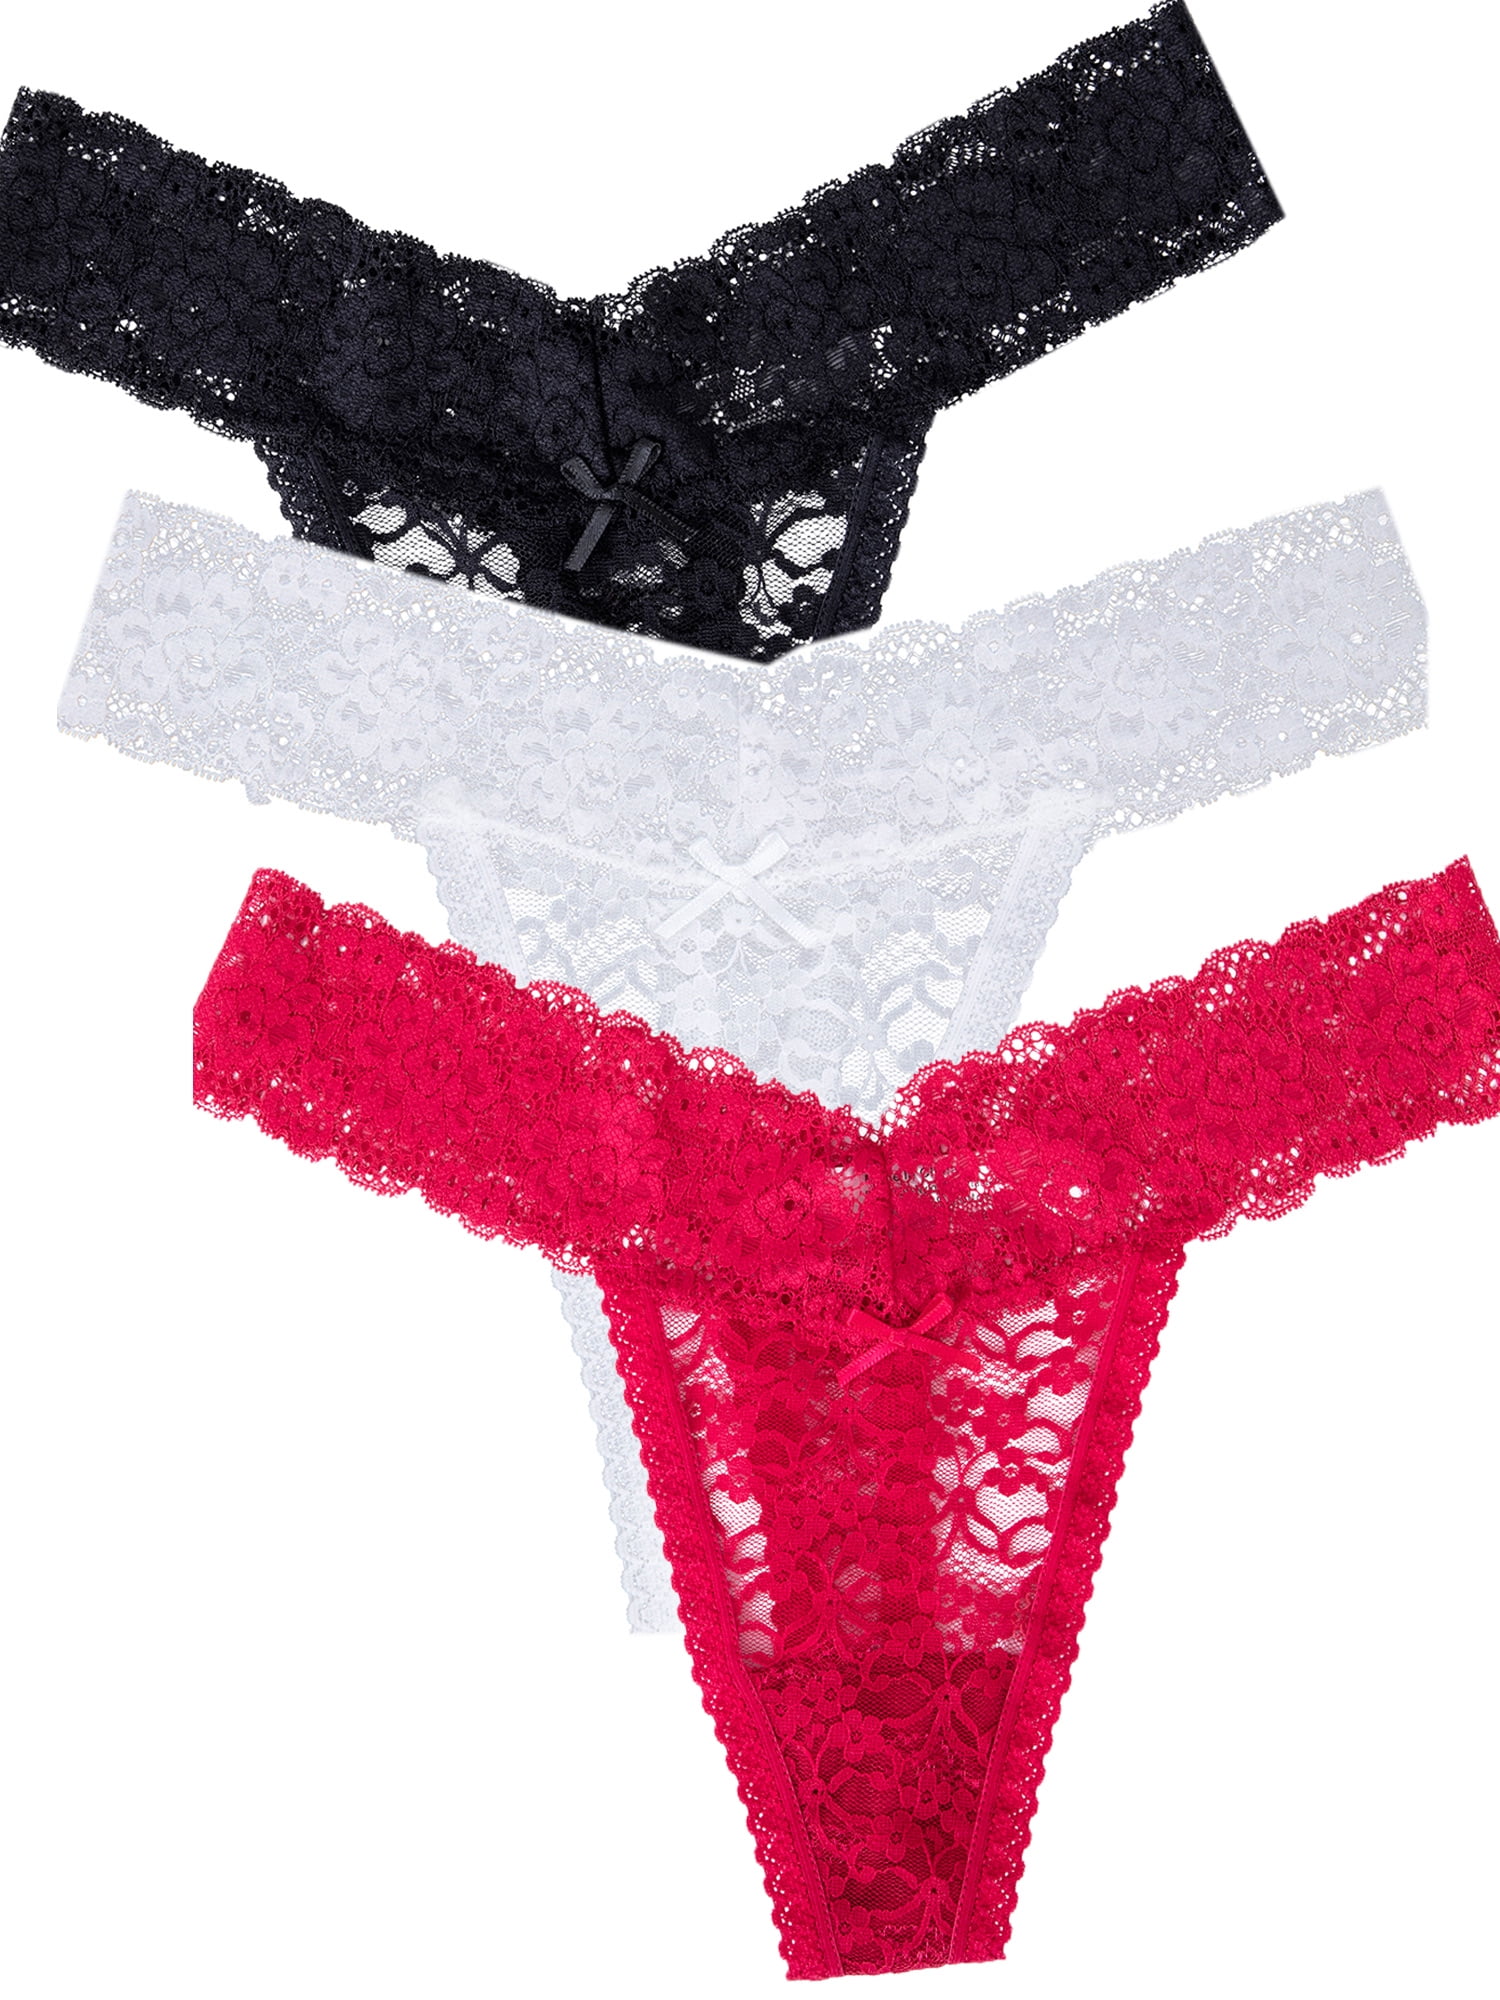 LELINTA 3 Set Women's Lace Thong Panties Sexy G-string Lace Thong Seamless  Panties Lingerie Womens Underwear, Black/White/Red 